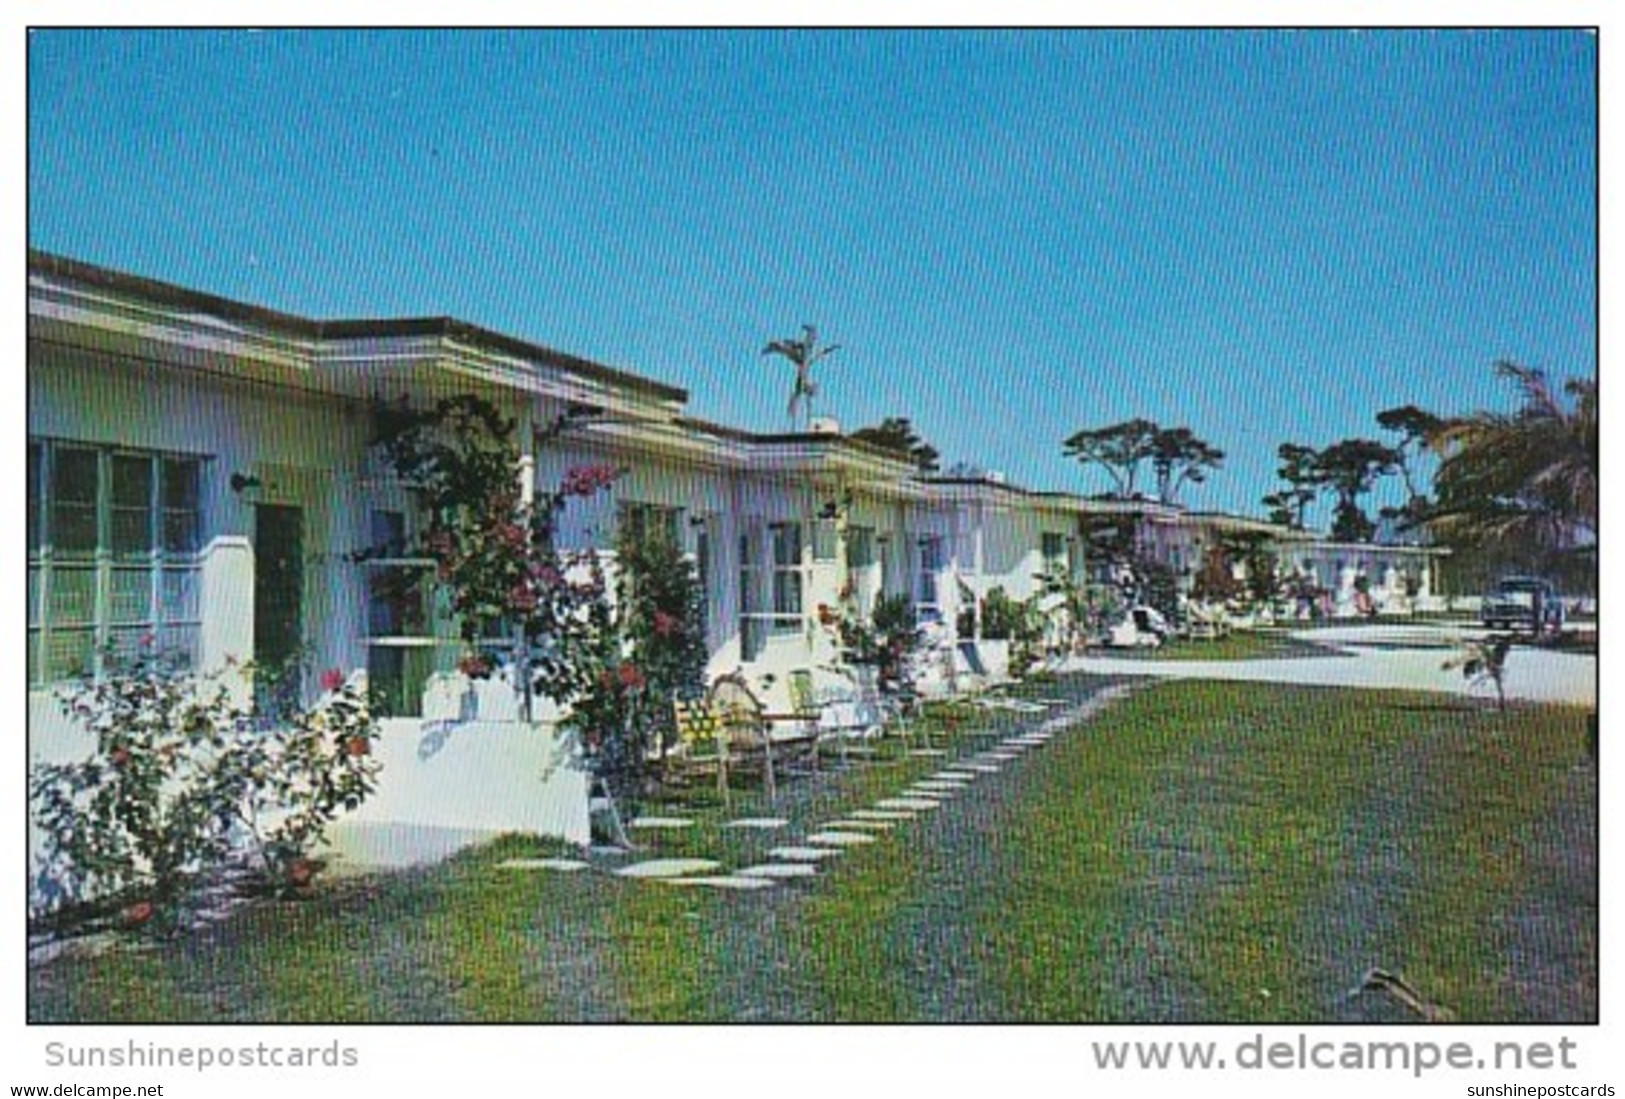 Siesta Terrace Motel Naples Florida - Naples